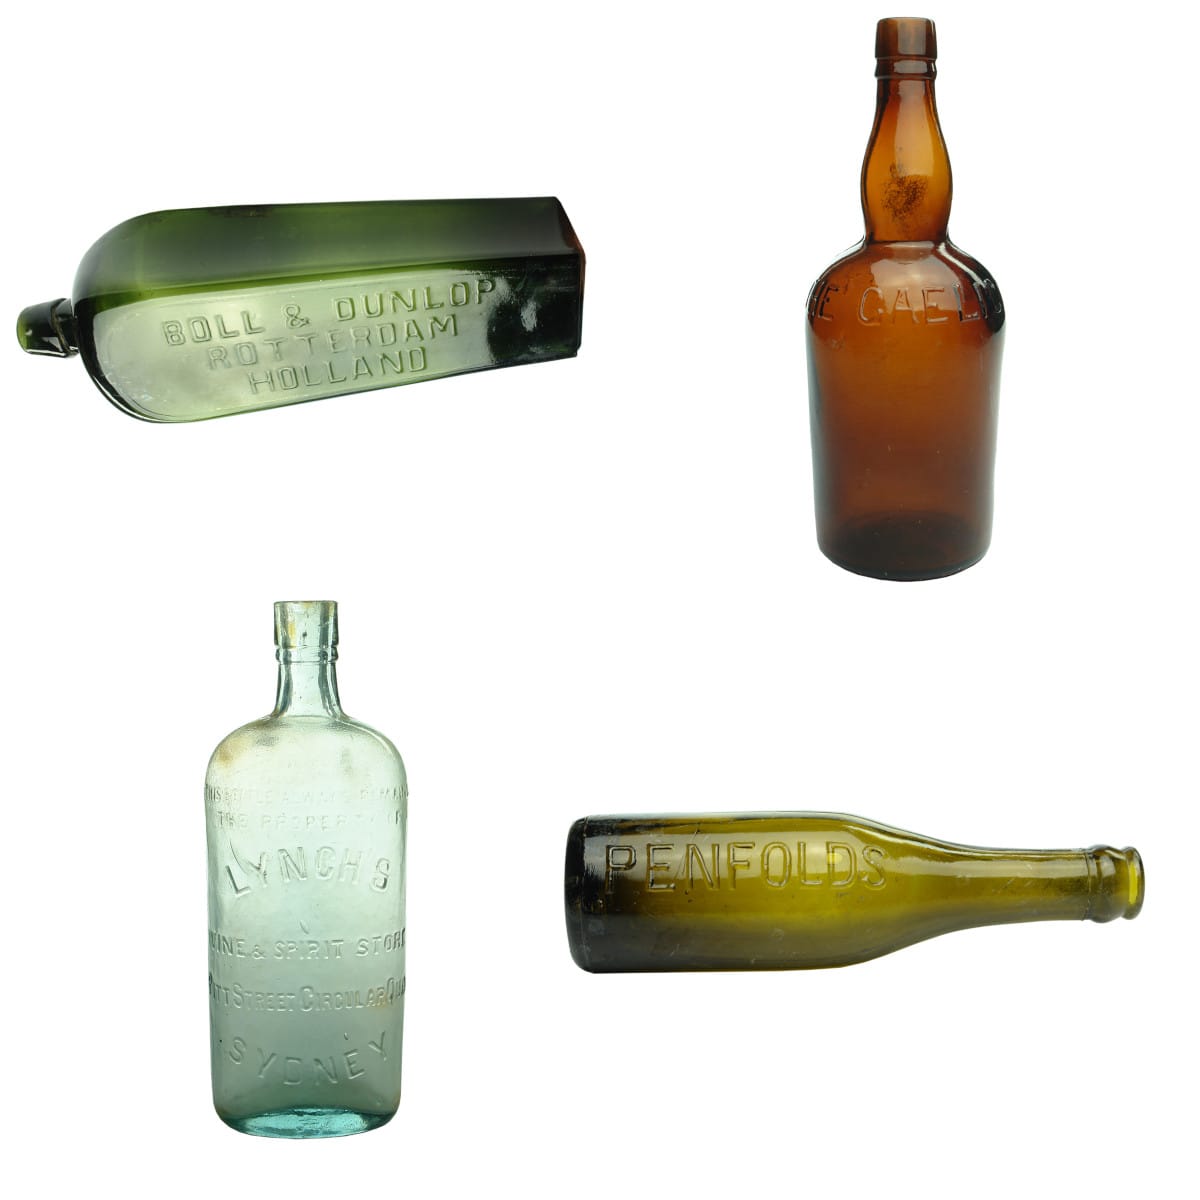 4 Spirits & Wine Bottles: Boll & Dunlop; Gaelic Whisky; Lynch's Circular Quay; Penfolds.